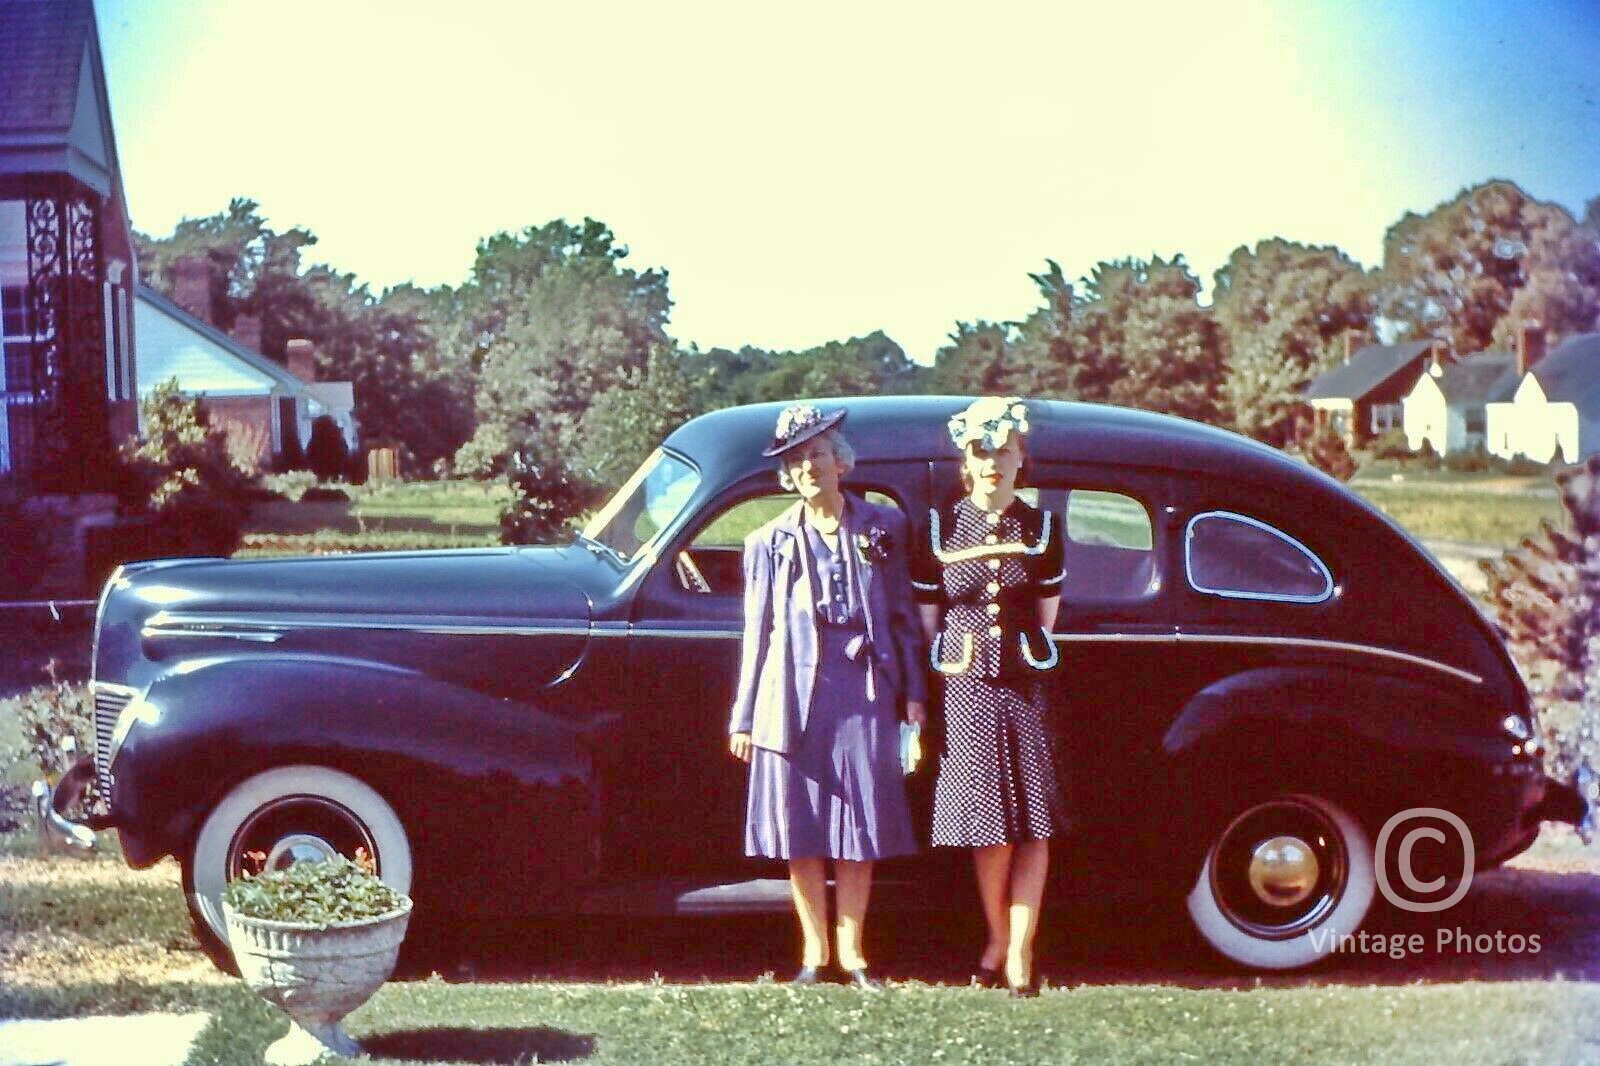 1940s American Fashion - Classic Blue Car